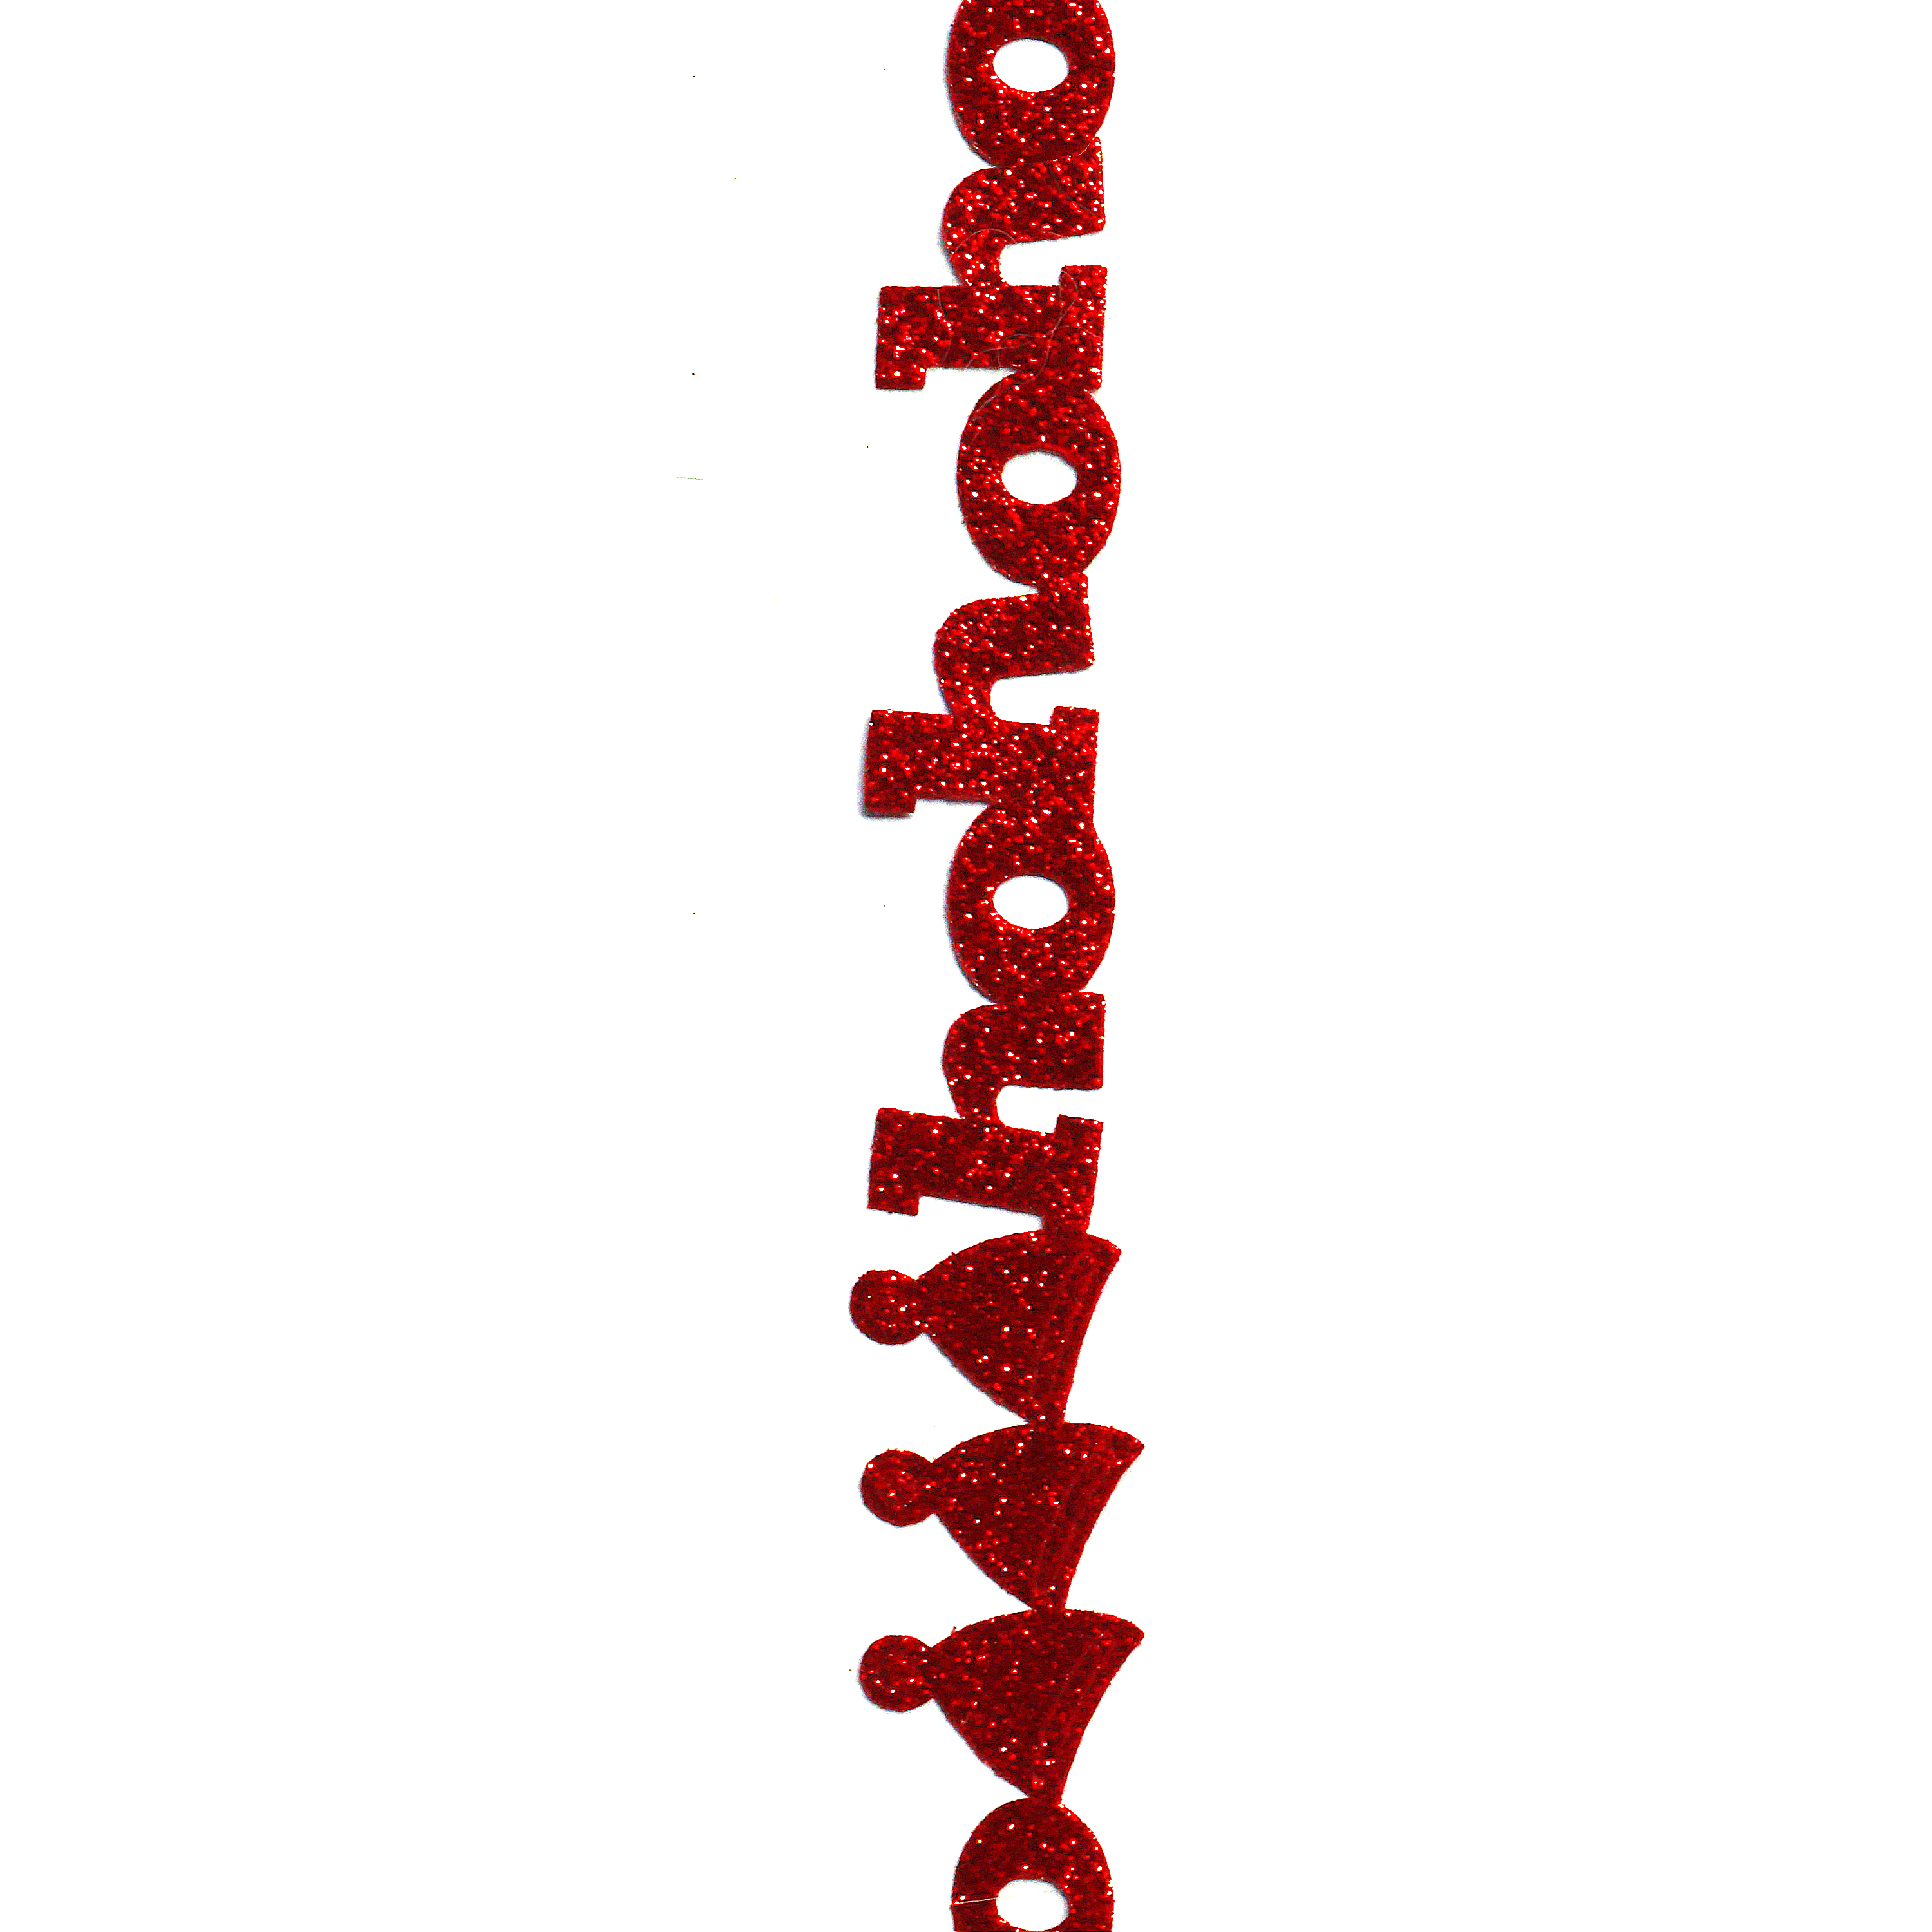 Die Cut Red Christmas Ribbon, Ho Ho Ho' Words, 7/8" x 12 Yards by Gwen Studios - image 3 of 3